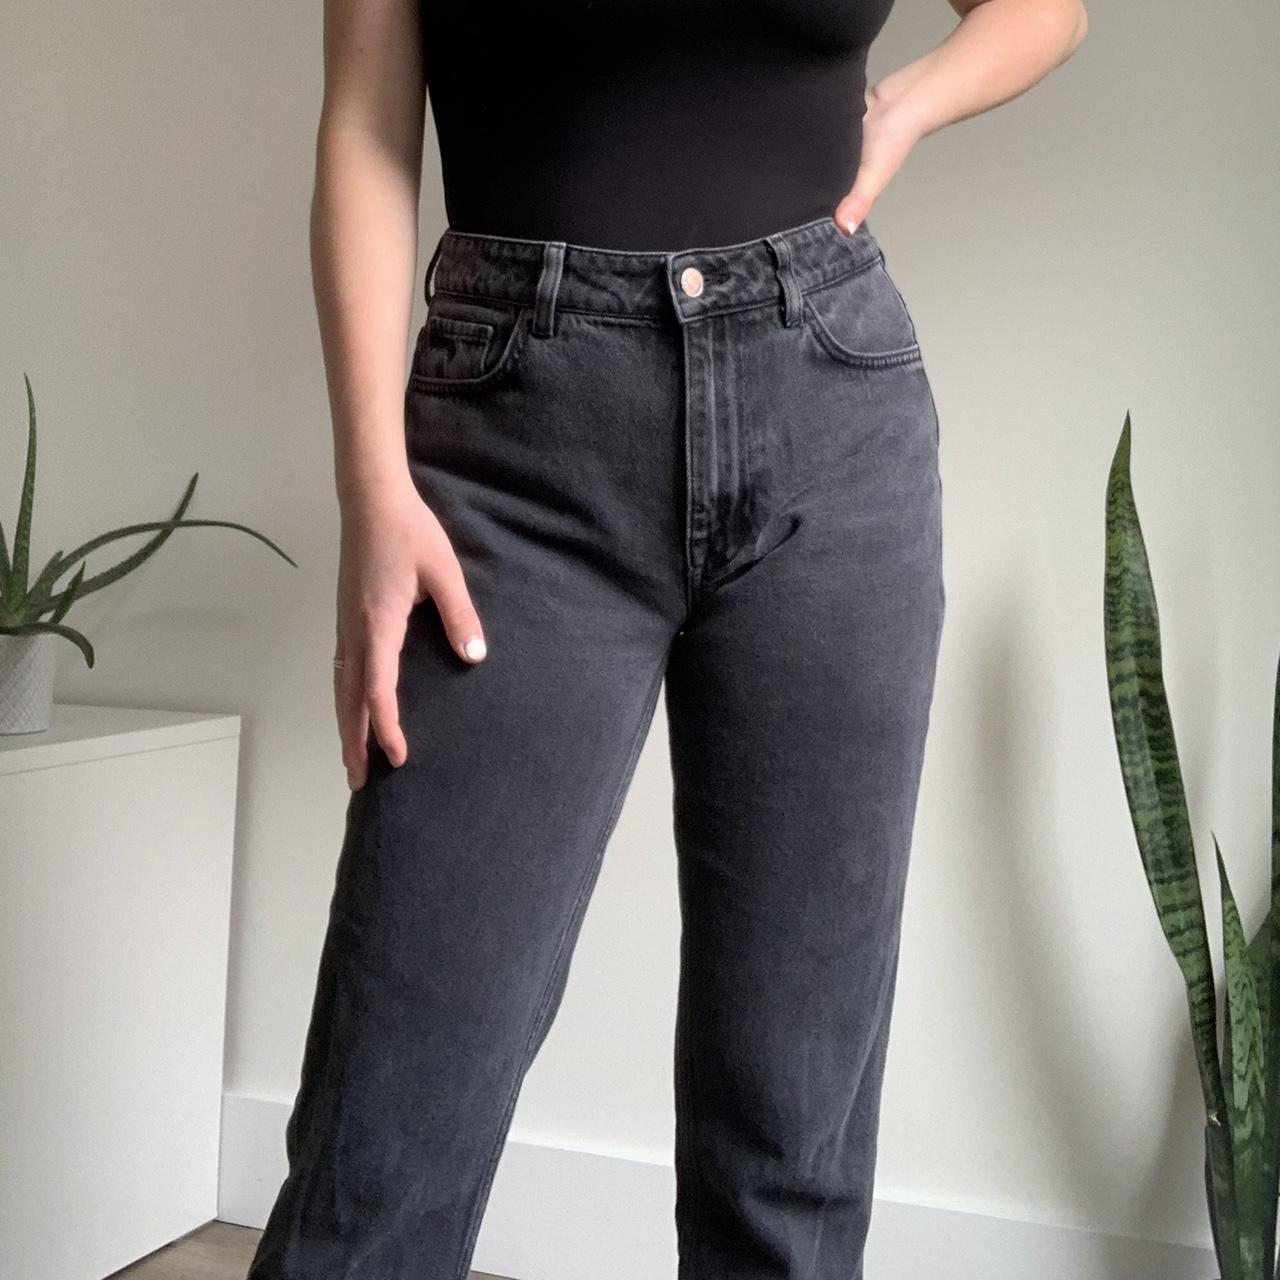 Zara Women's Grey and Black Jeans | Depop